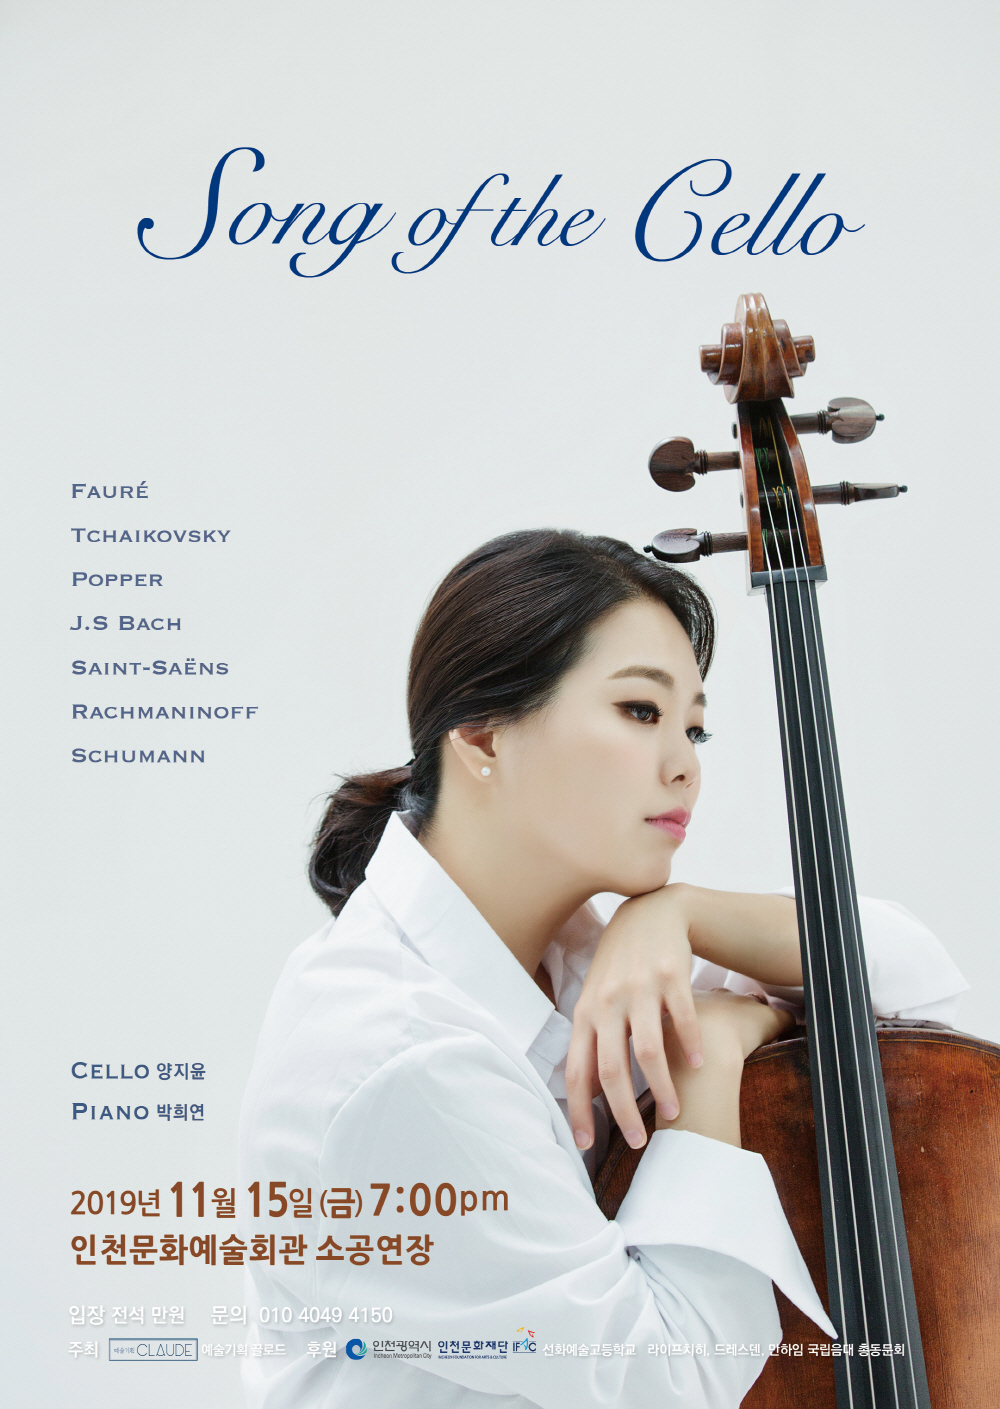 song of the cello

첼로 양지윤
피아노 박희연
2019년 11월 15일 오후 7시
인천문화예술회관 소공연장